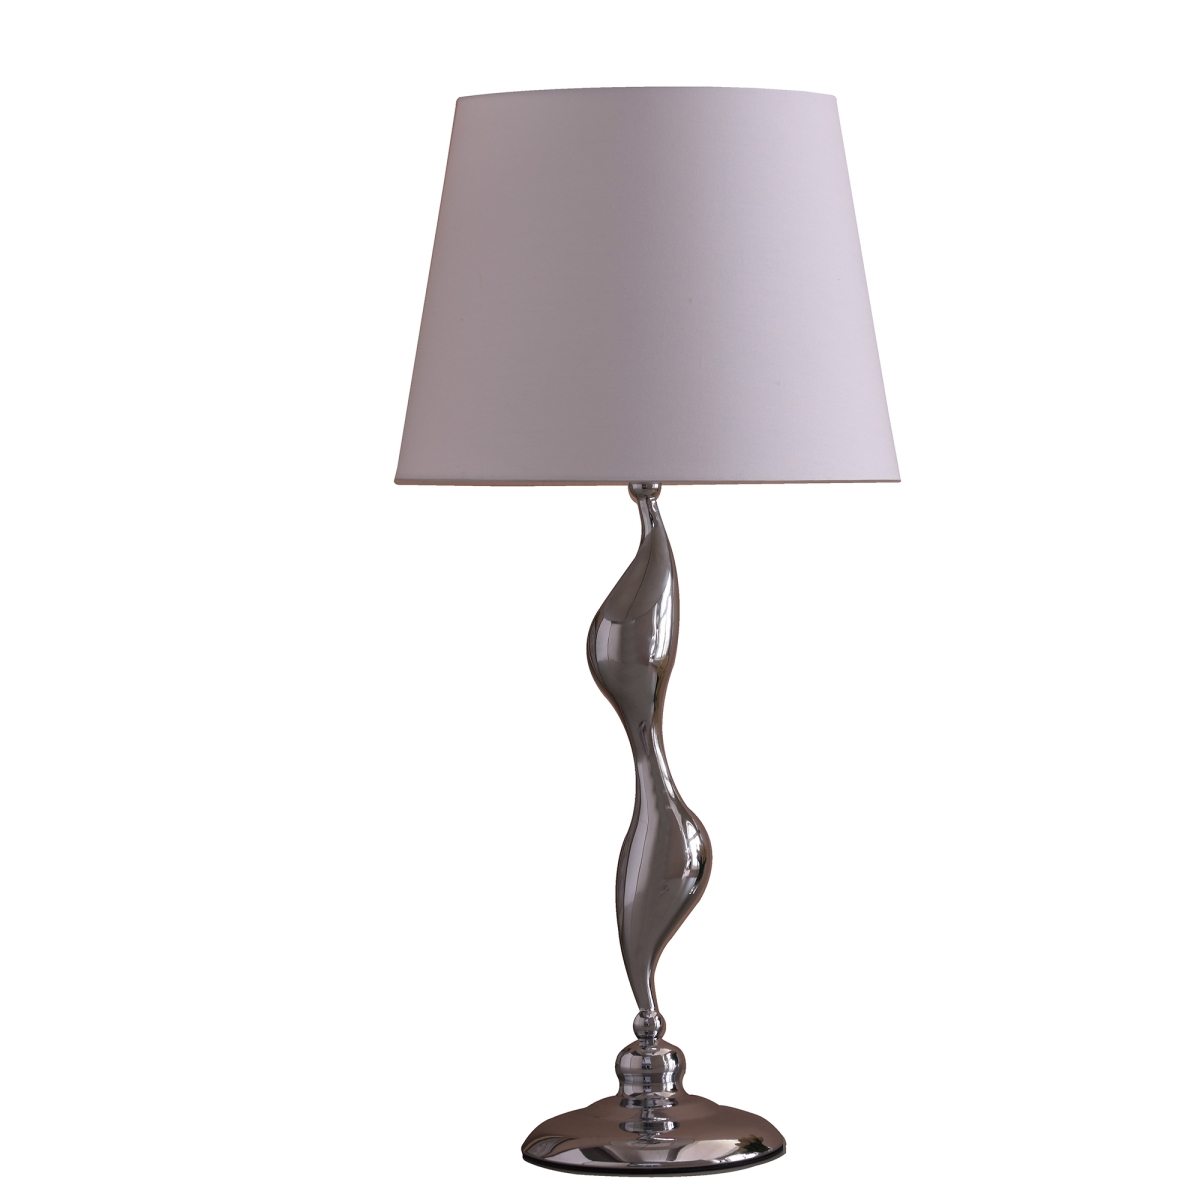 Hbl2219 24 In. Erte Art Deco Silhouette Table Lamp - Silver Chrome & White